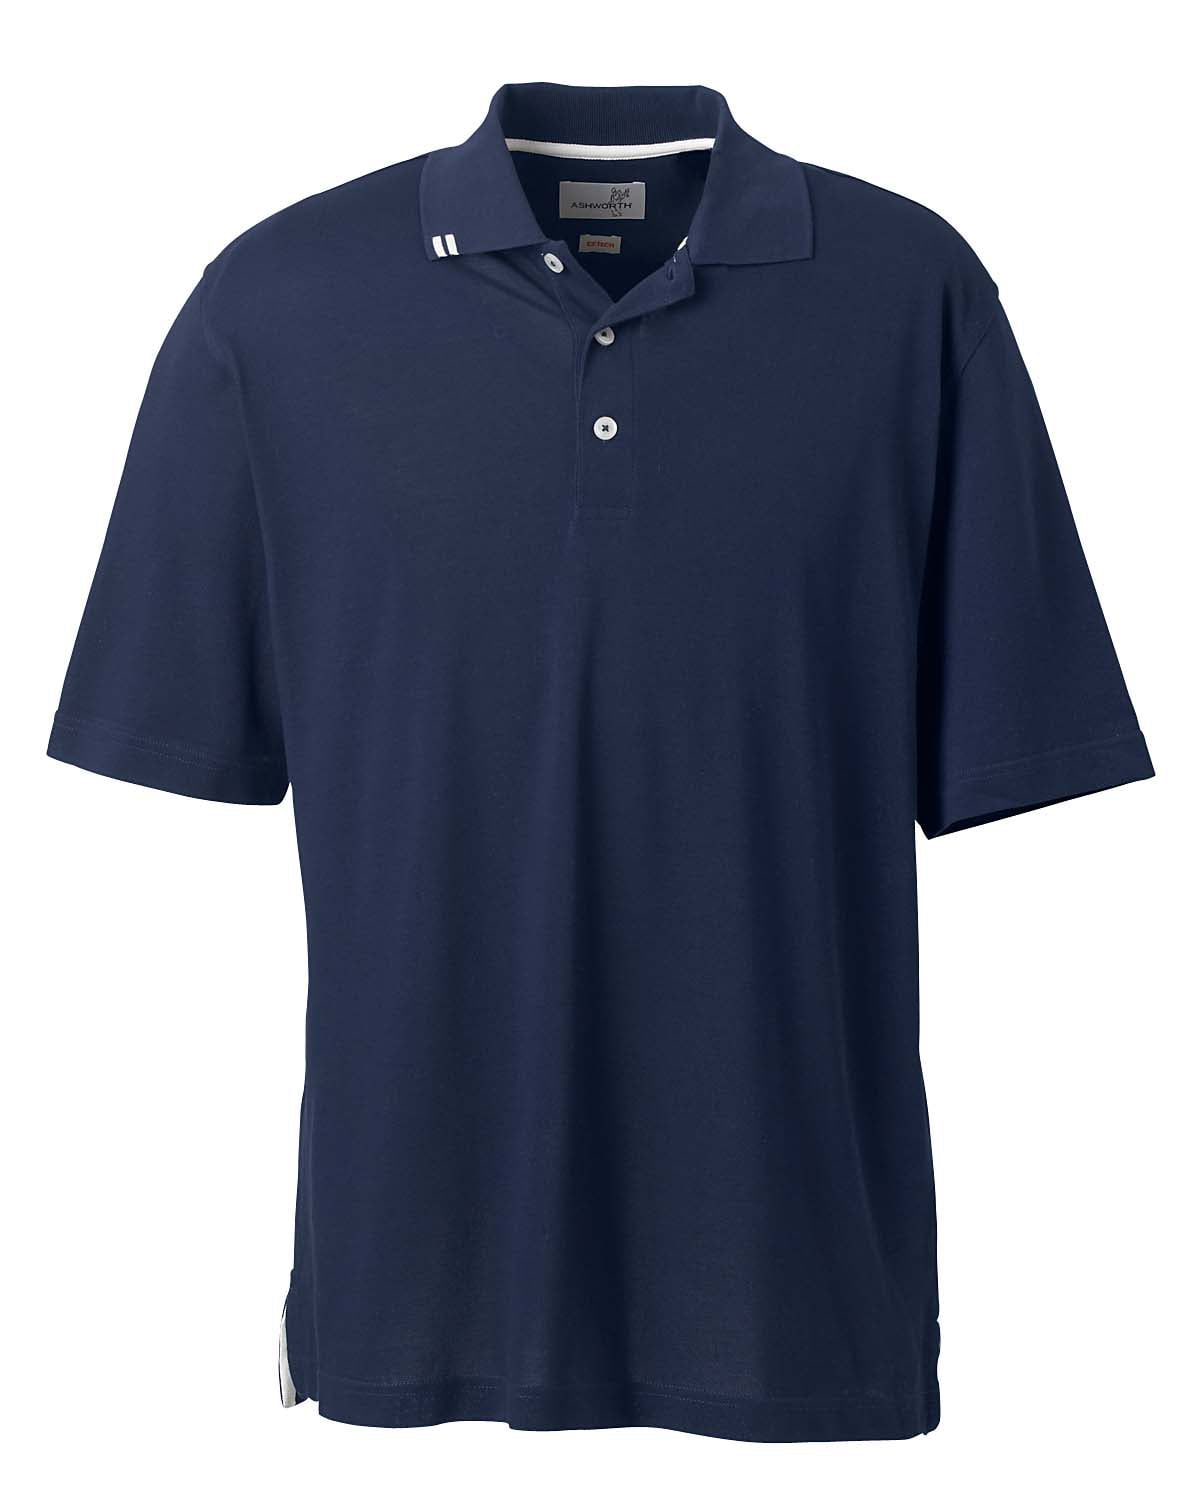 Ashworth Polo Shirt 1139 Men's EZ-Tech Pique - Walmart.com